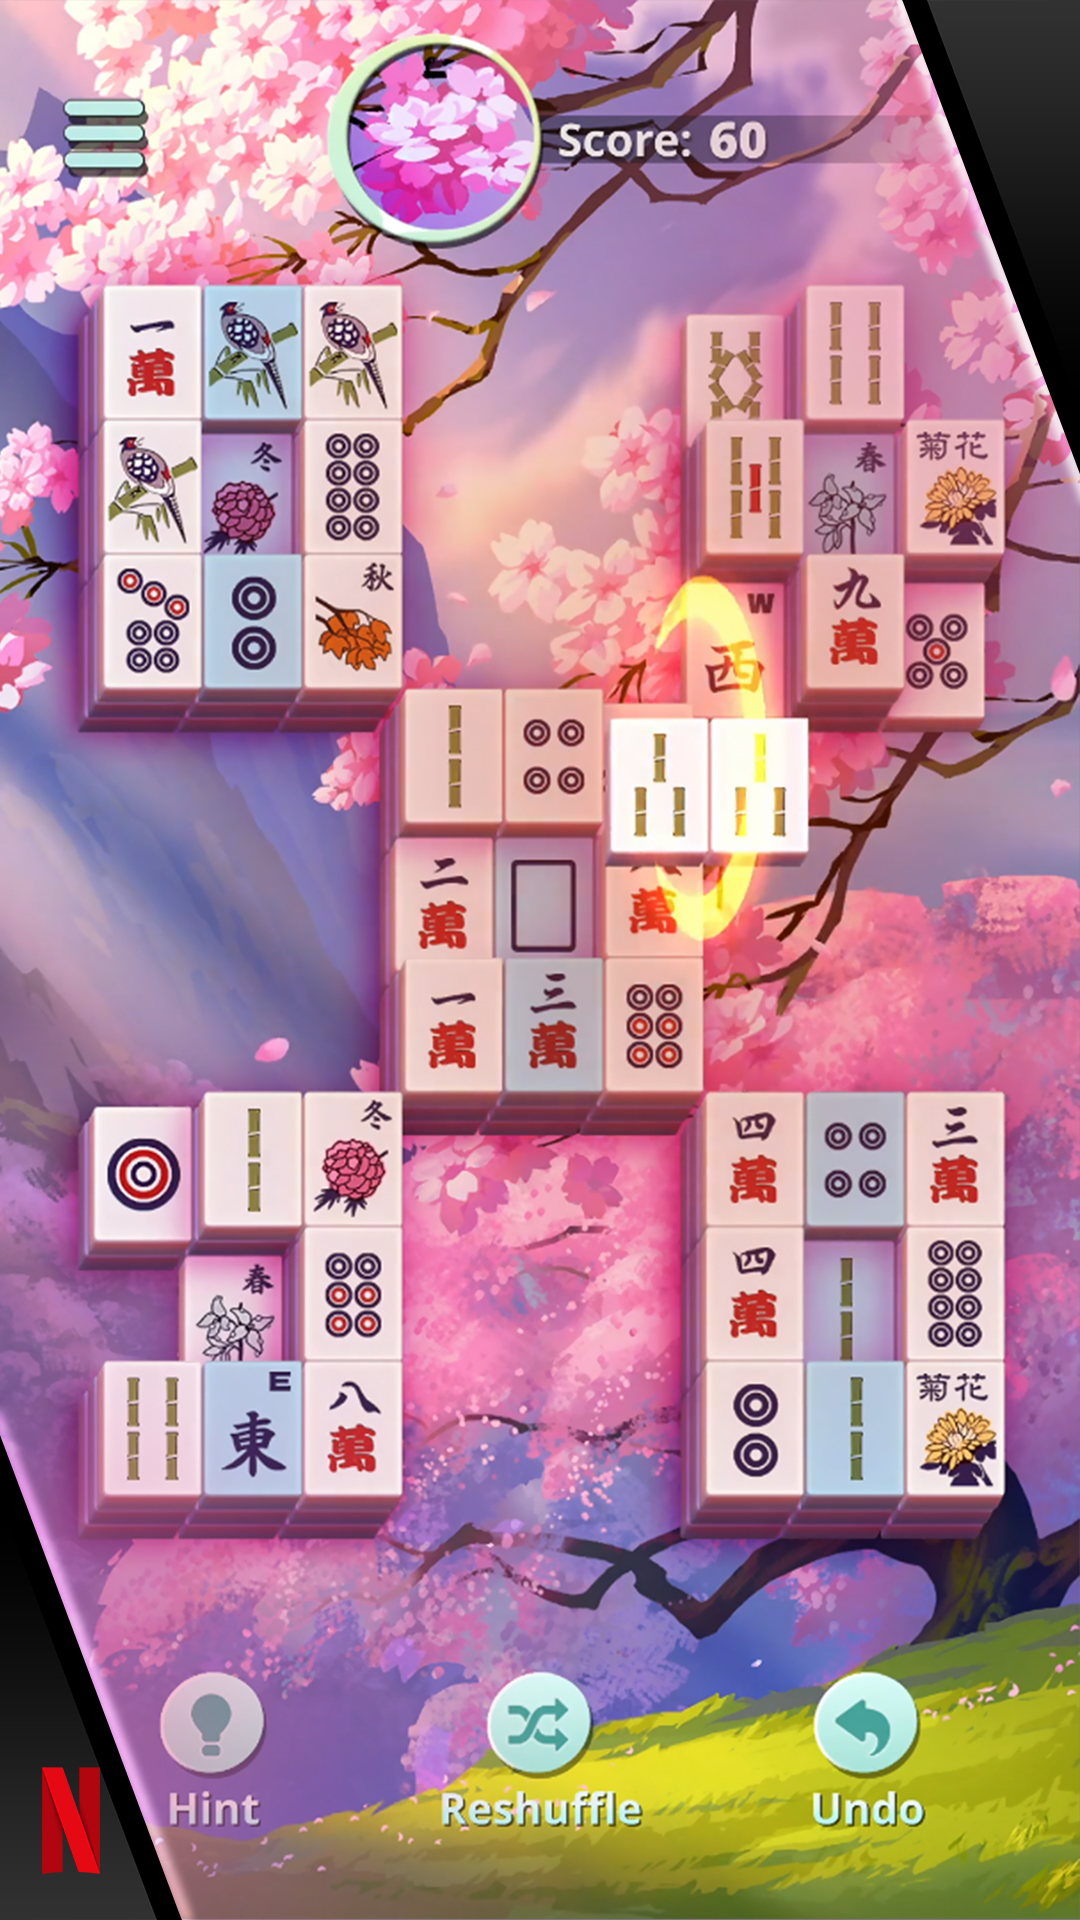 NETFLIX Mahjong Solitaire - Android game screenshots.